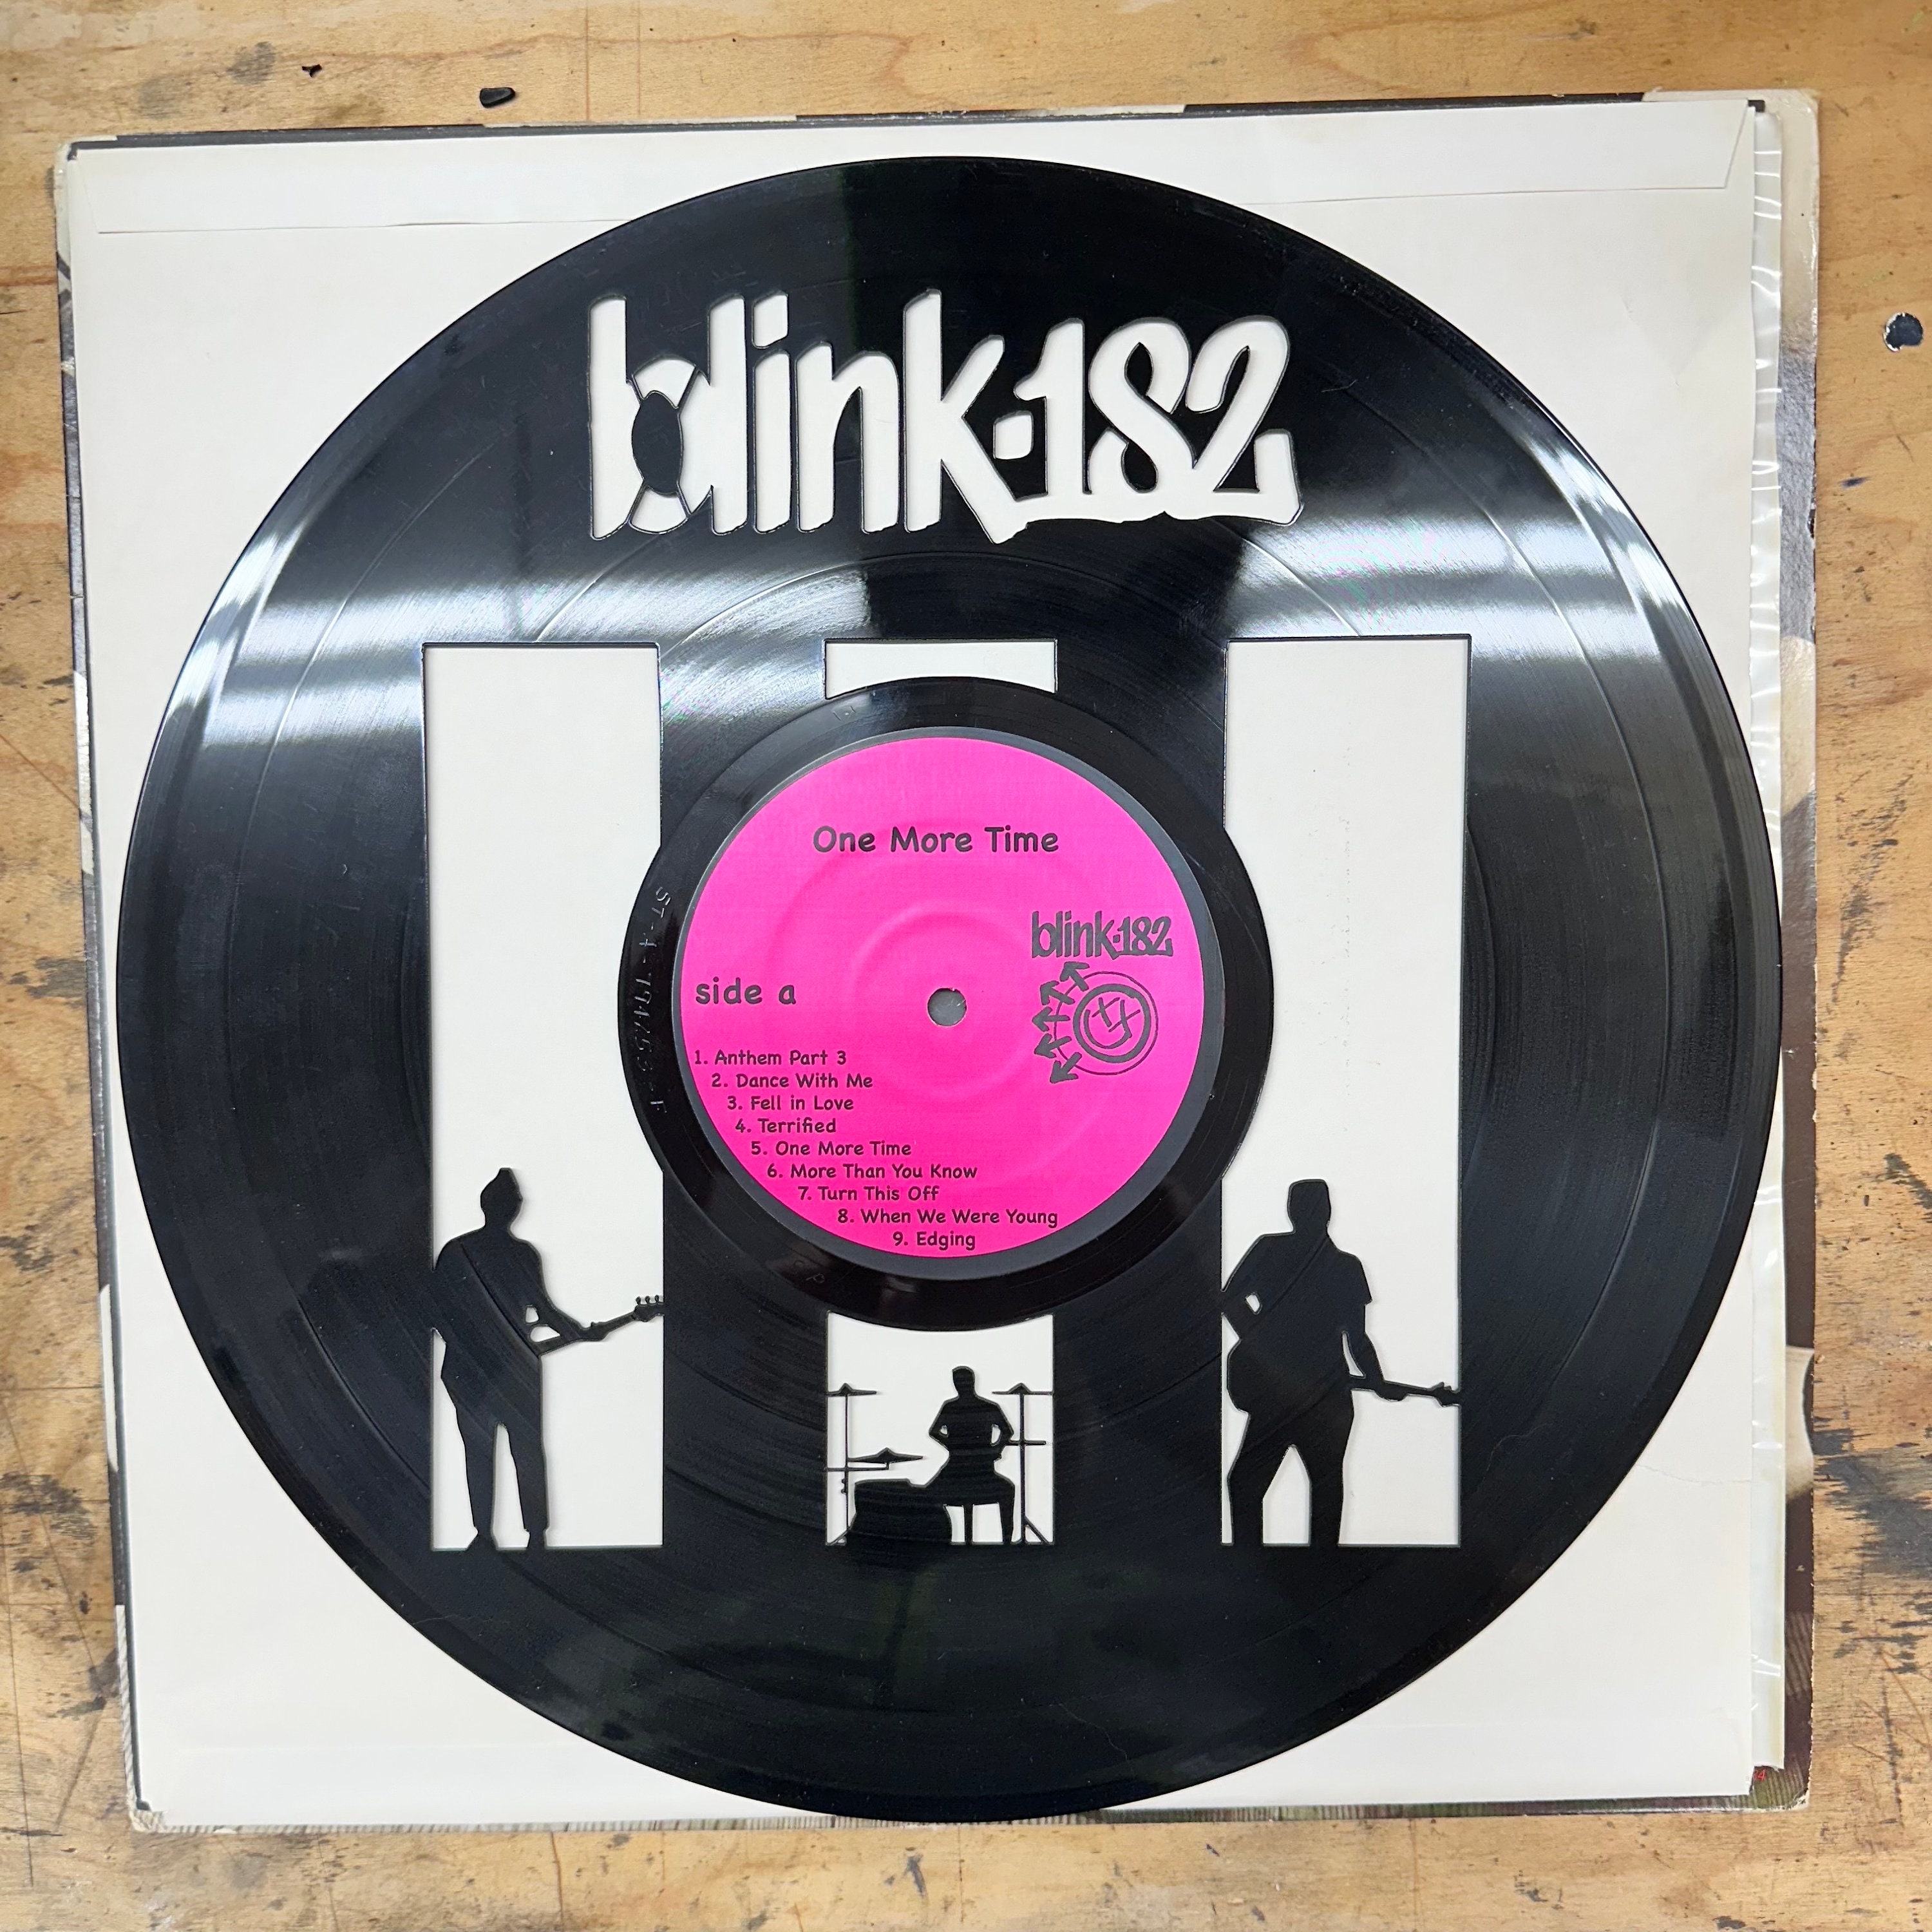 Green Day Laser Cut Vinyl Record Punk Custom Gift Birthday